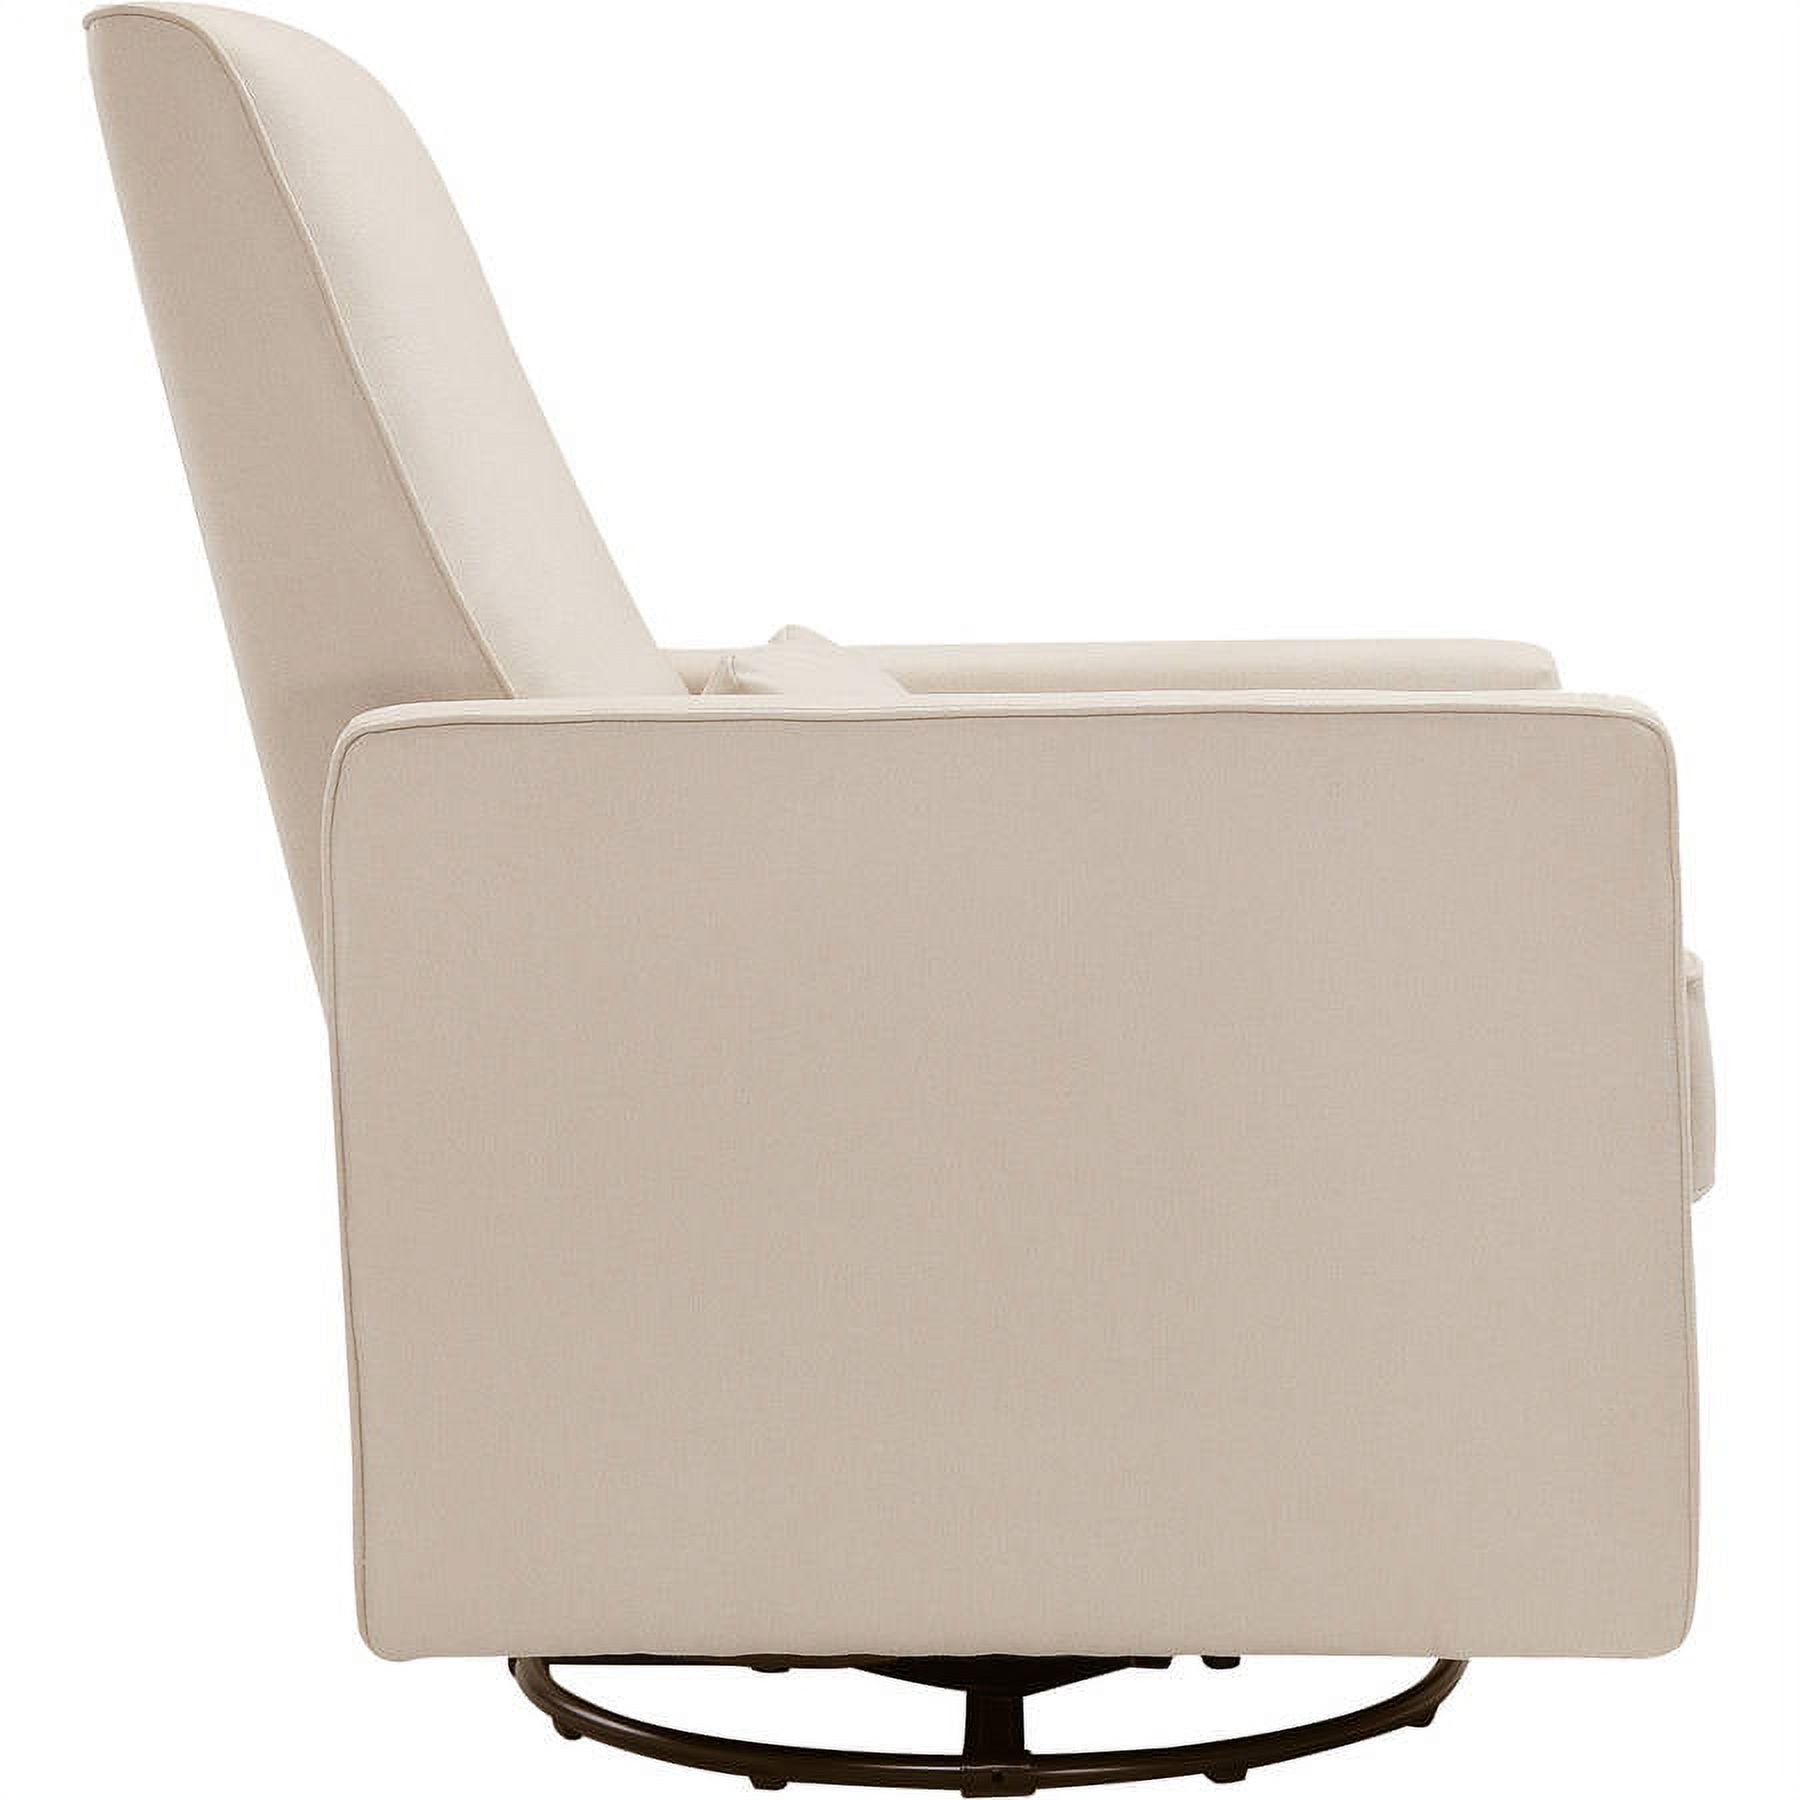 DaVinci Piper Reclining Glider Rocking Chair, Cream - image 3 of 16